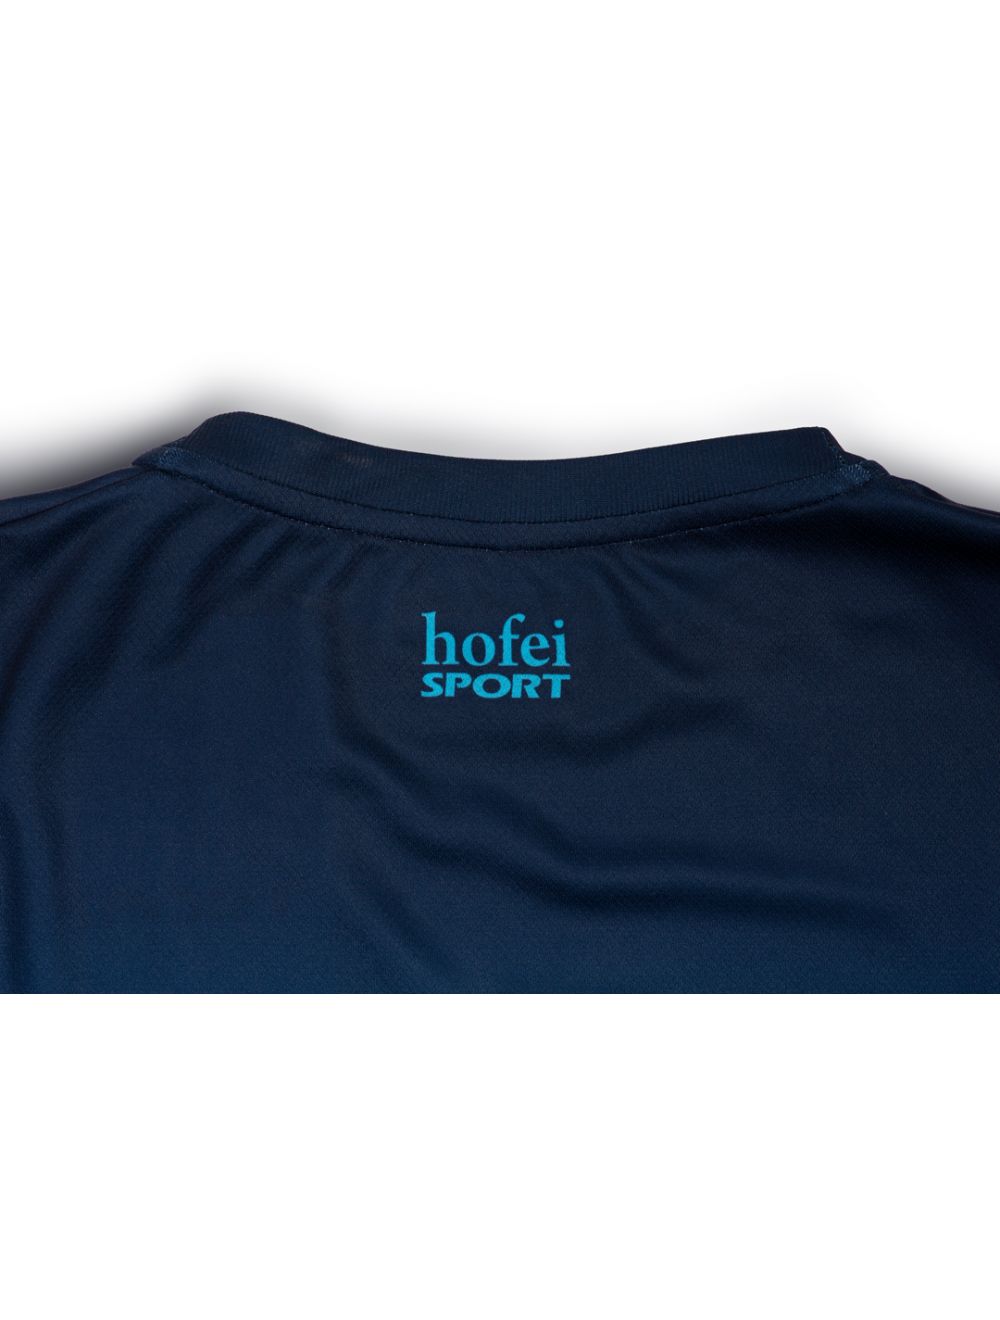 Maloja "Hofei Sport" men's multisport shirt